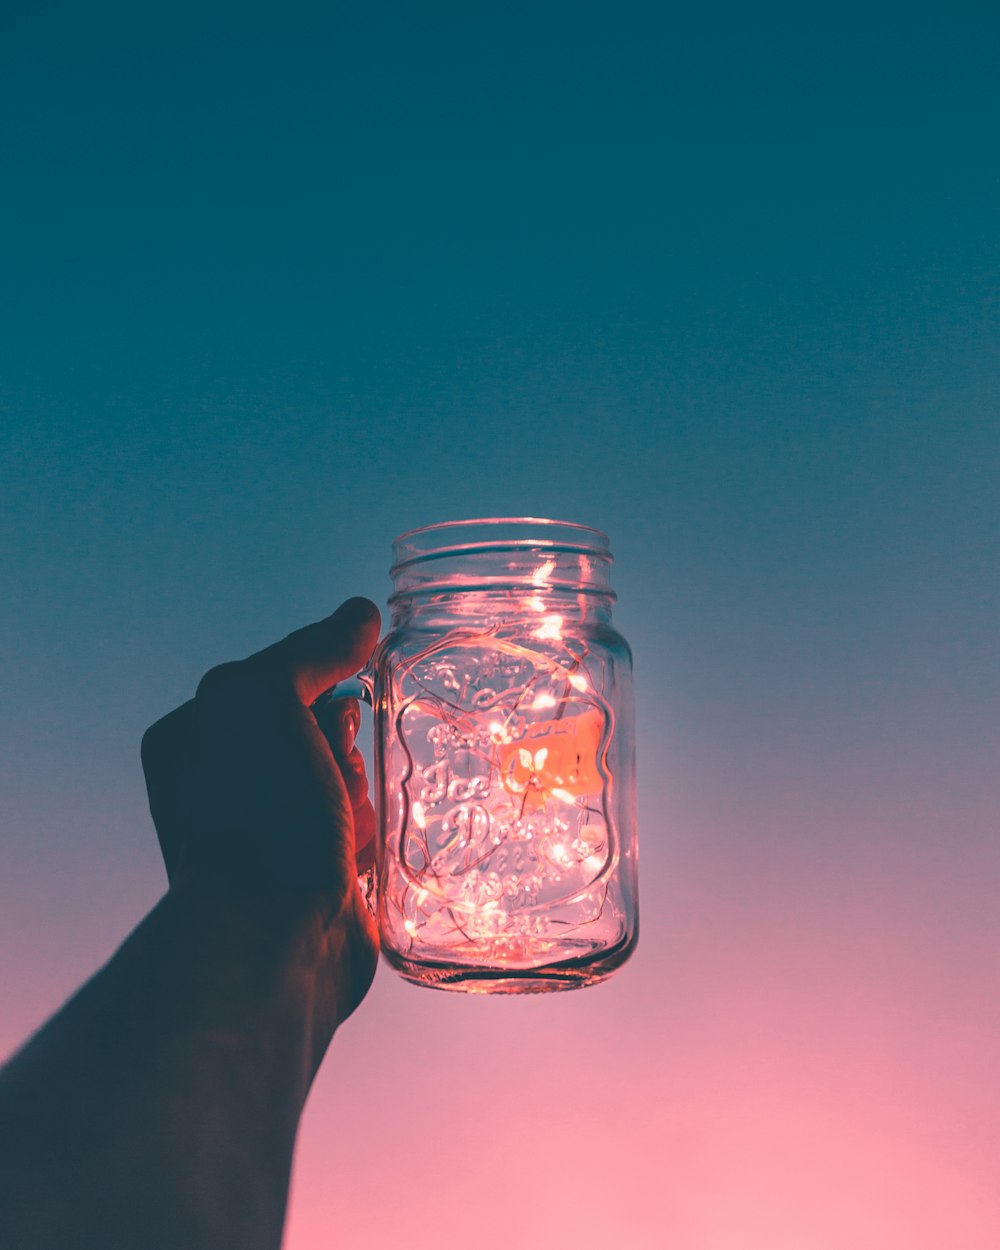 person holding clear glass mug jar